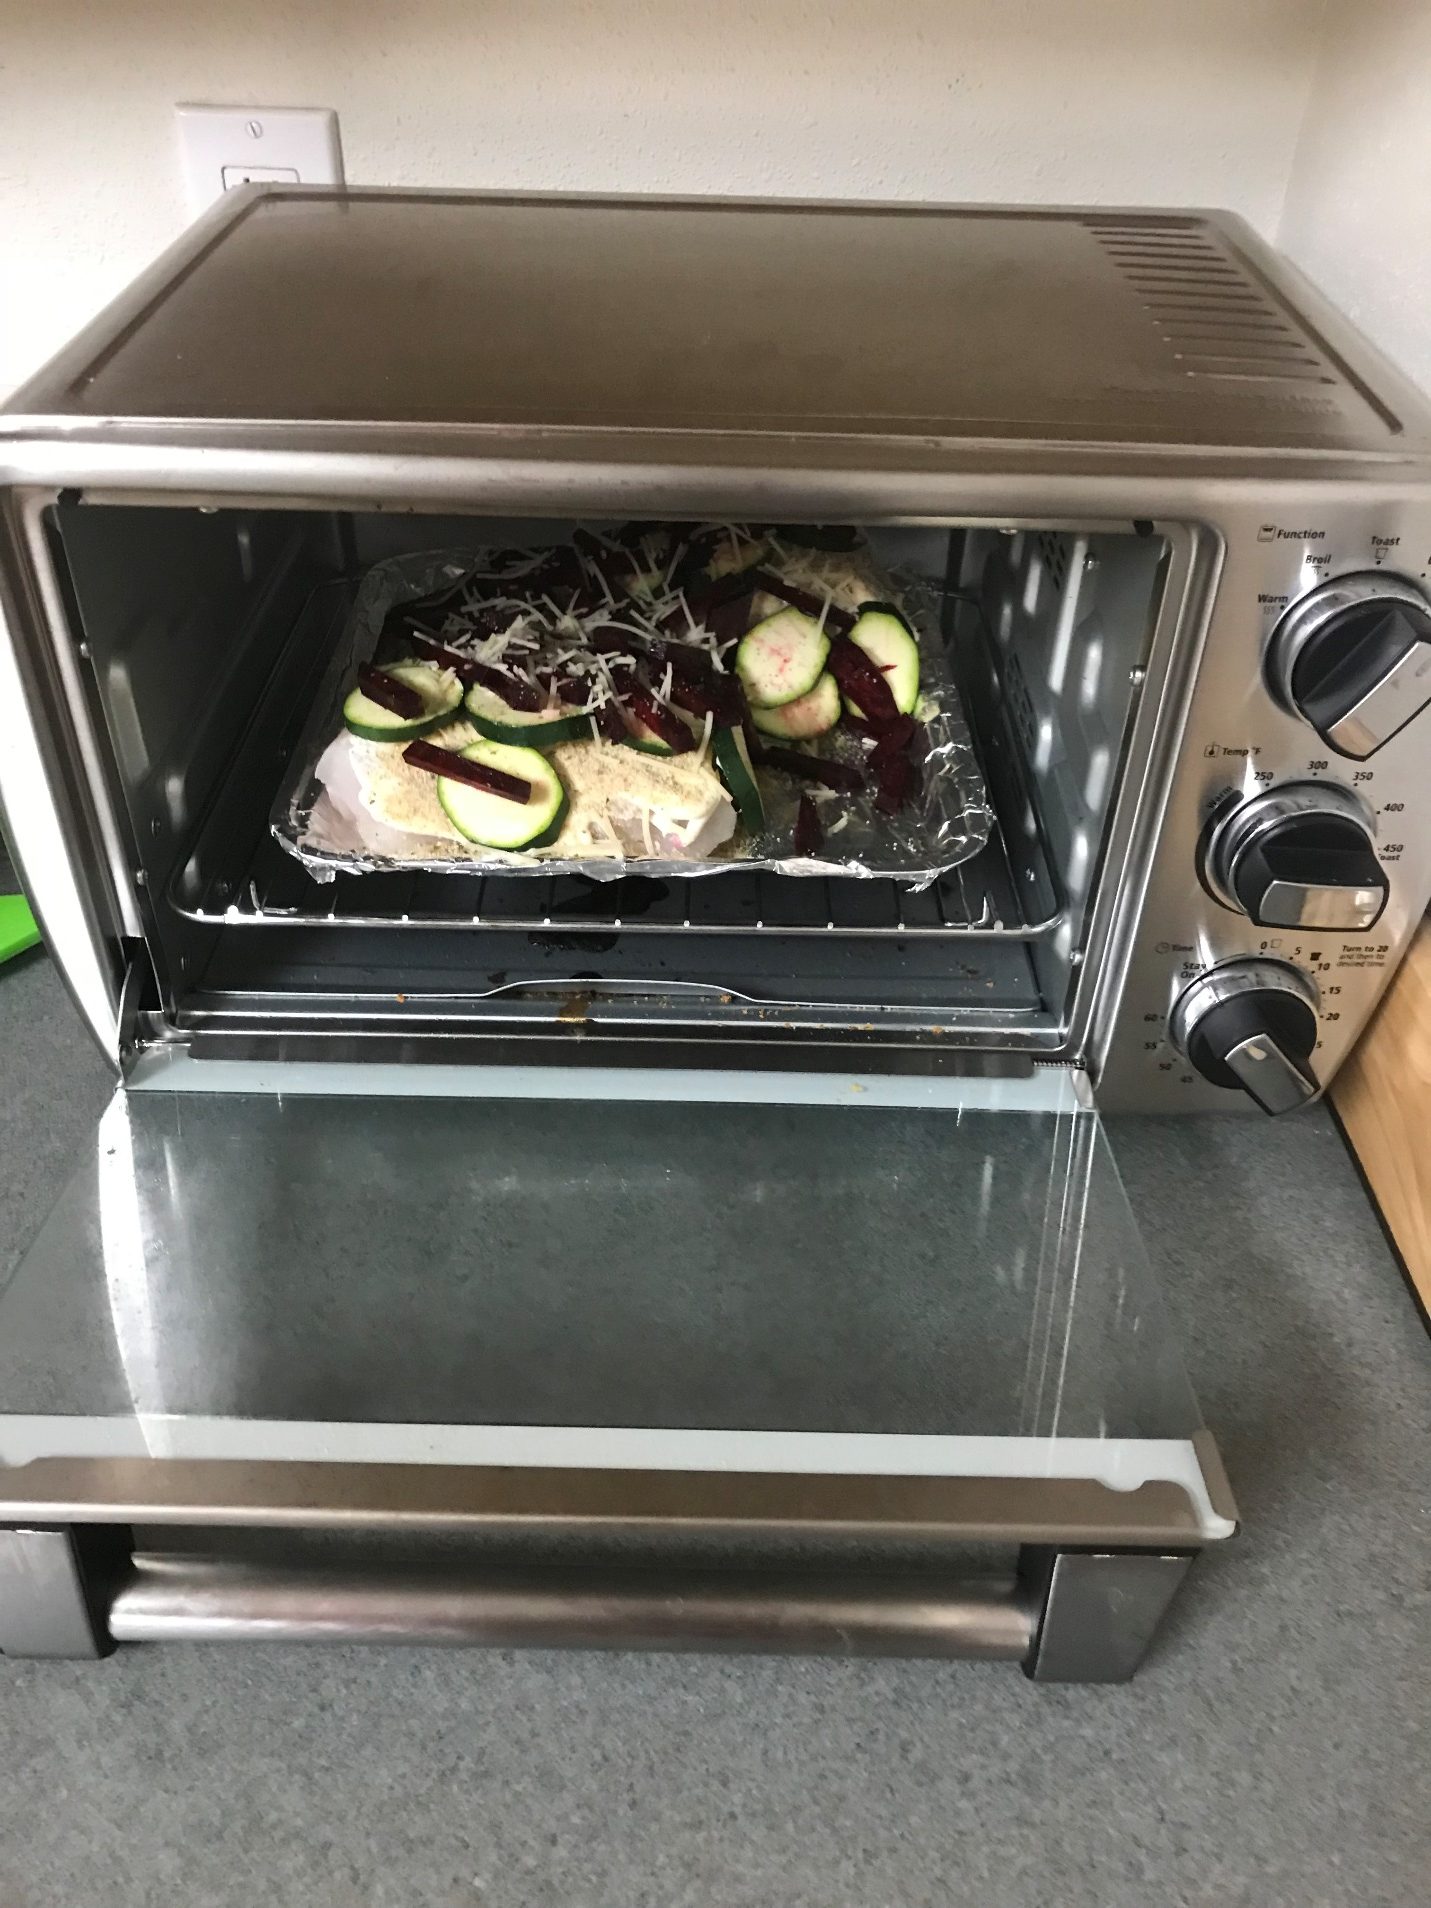 veggies in the oven